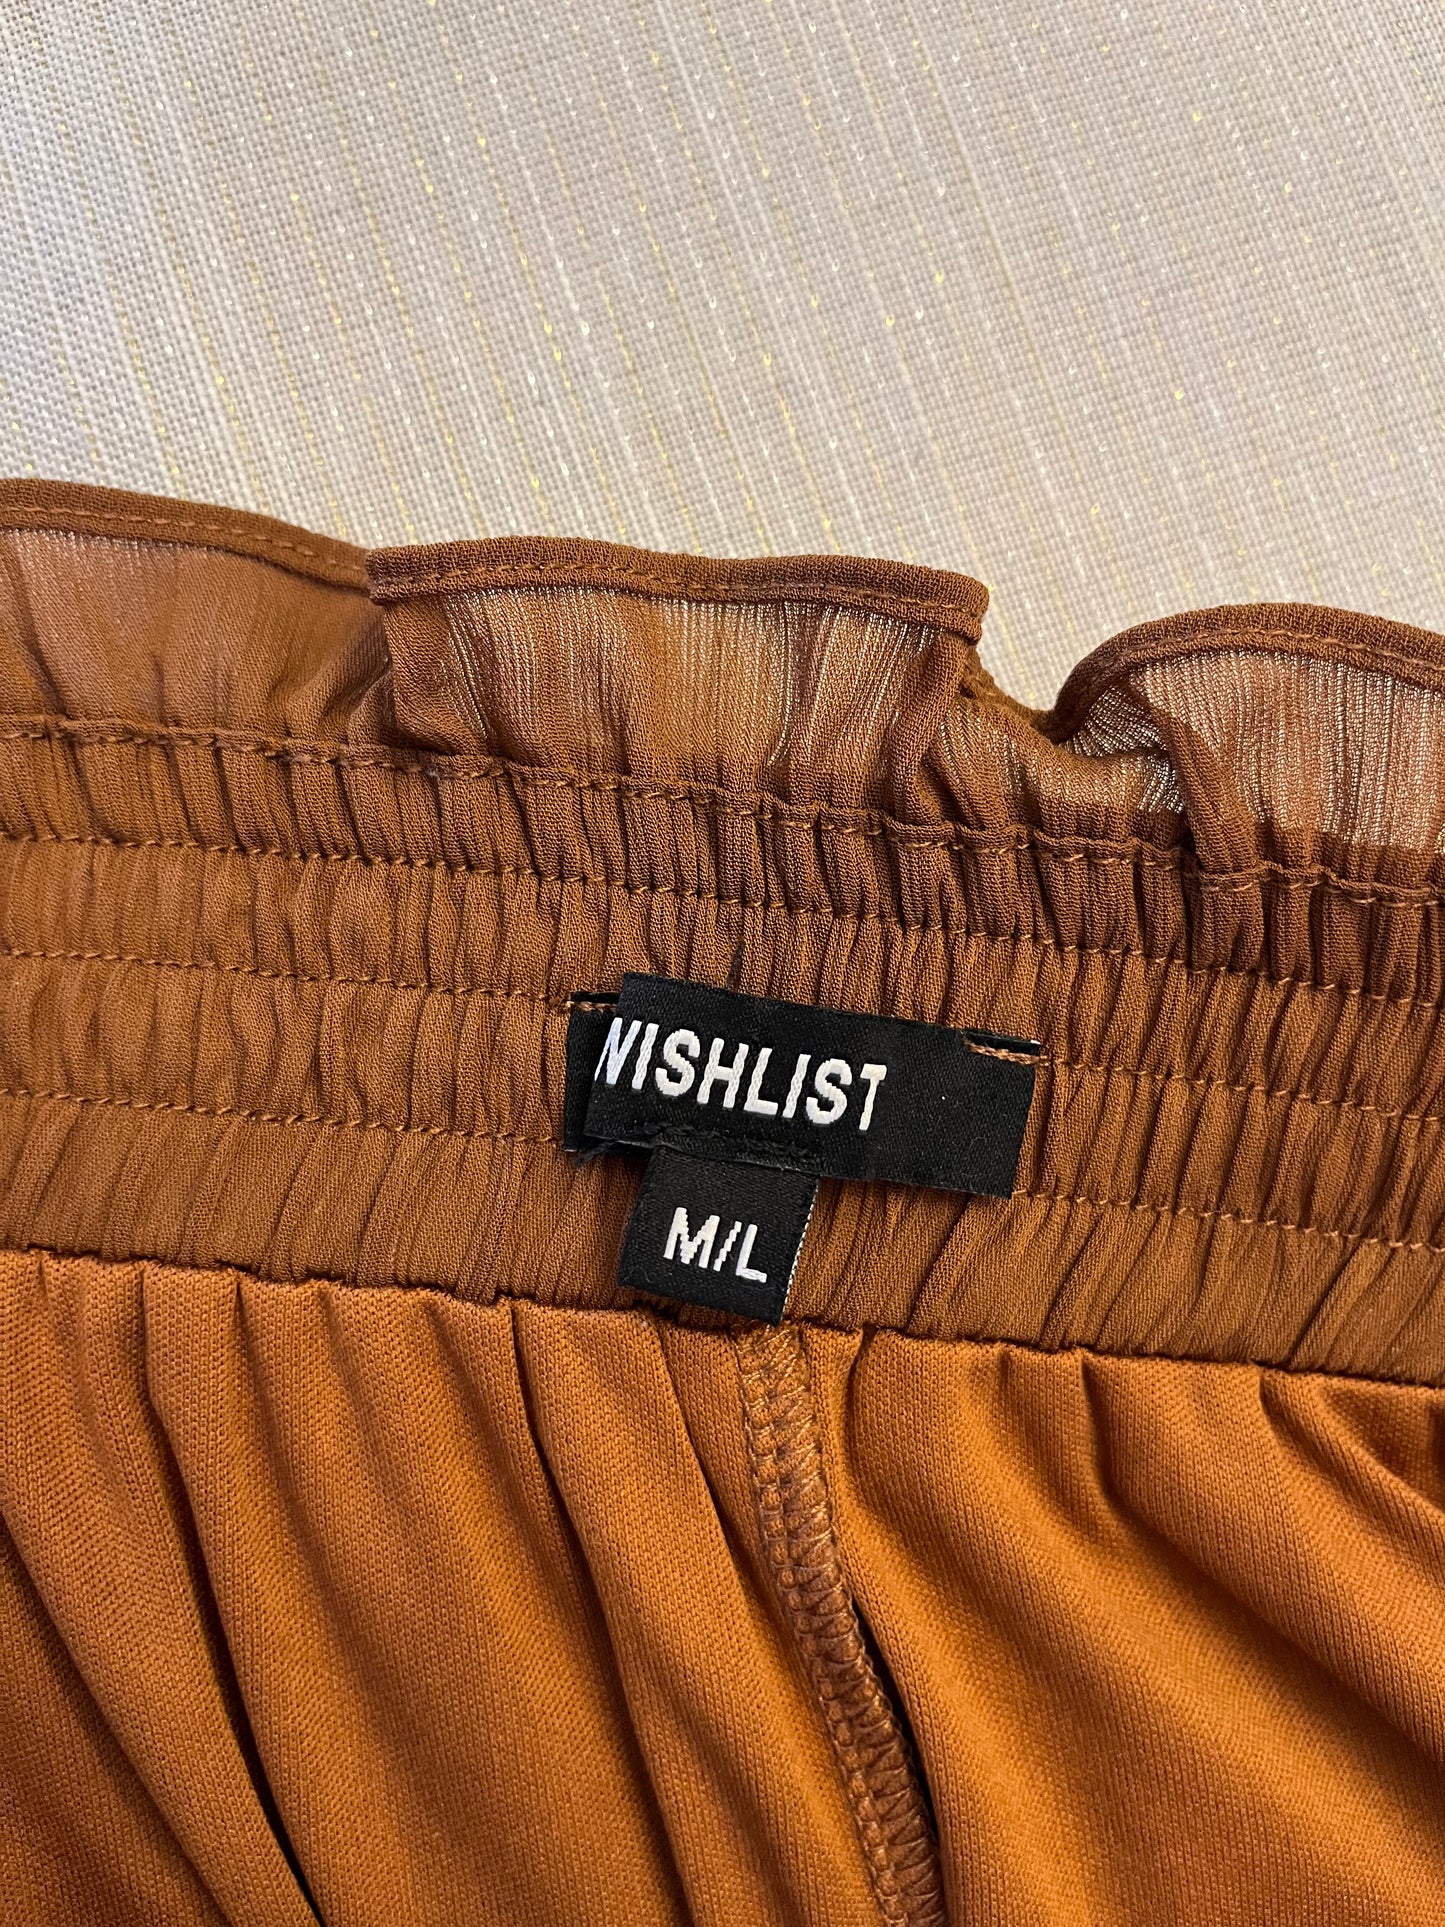 Wishlist Burnt Orange Maxi Skirt